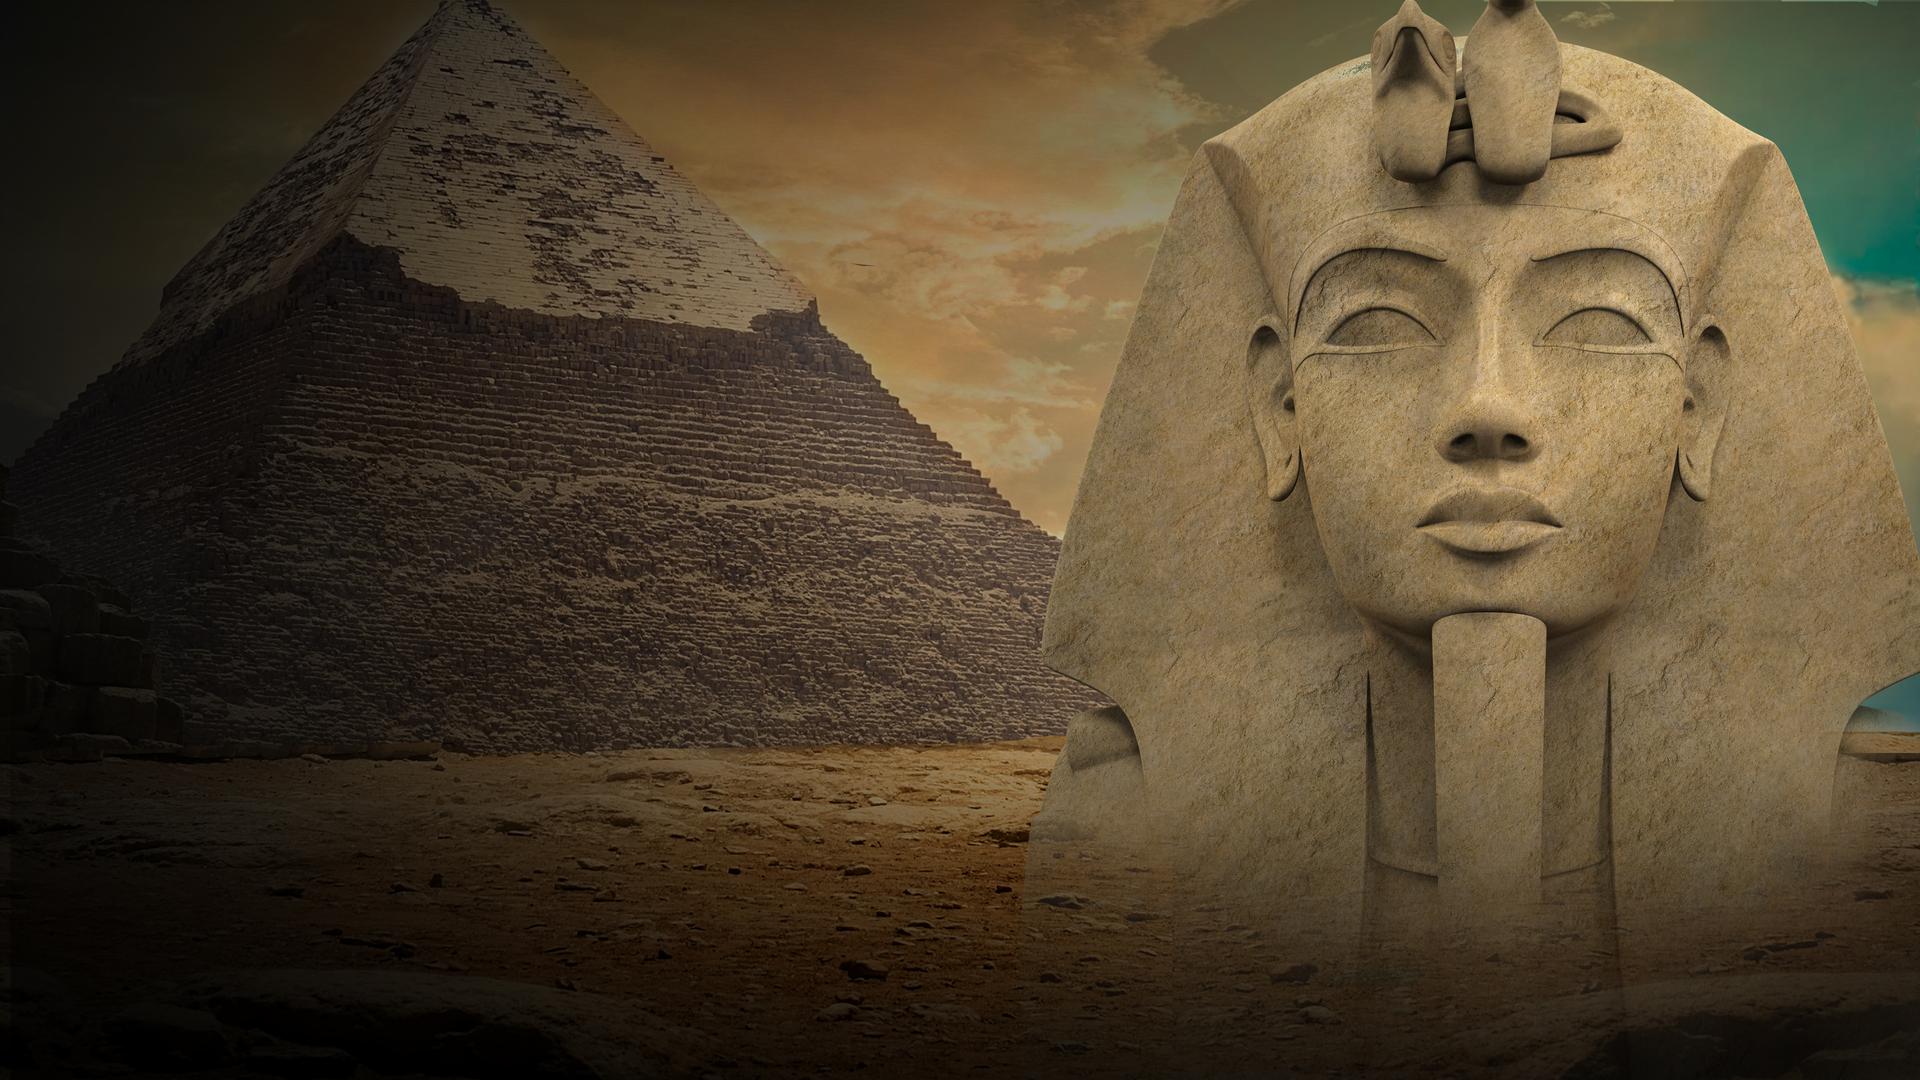 Ramesses II: The Great Journey